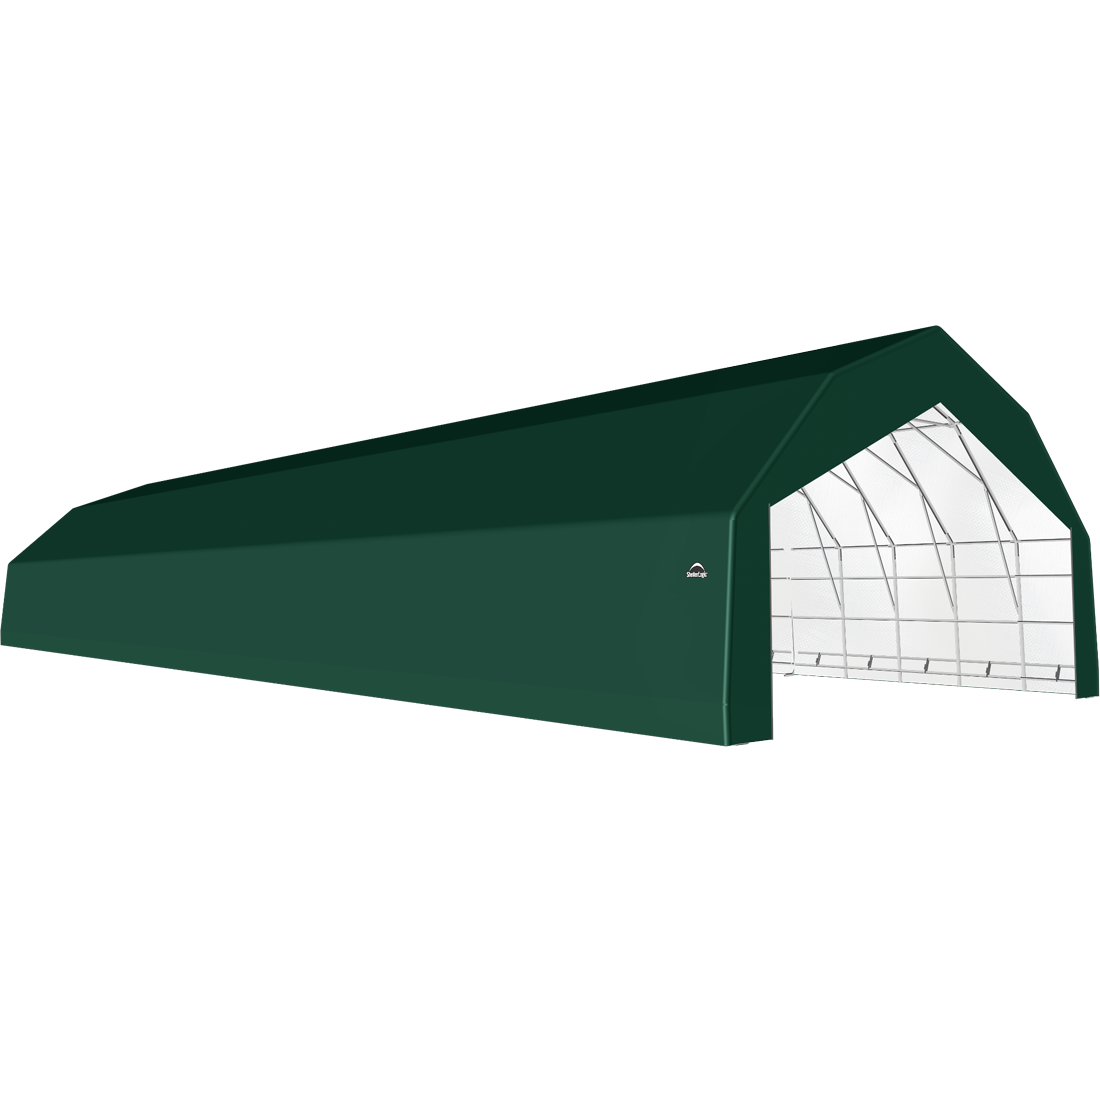 ShelterTech SP Series Barn Shelter, 30 ft. x 100 ft. x 18 ft. Heavy Duty PVC 14.5 oz. Green